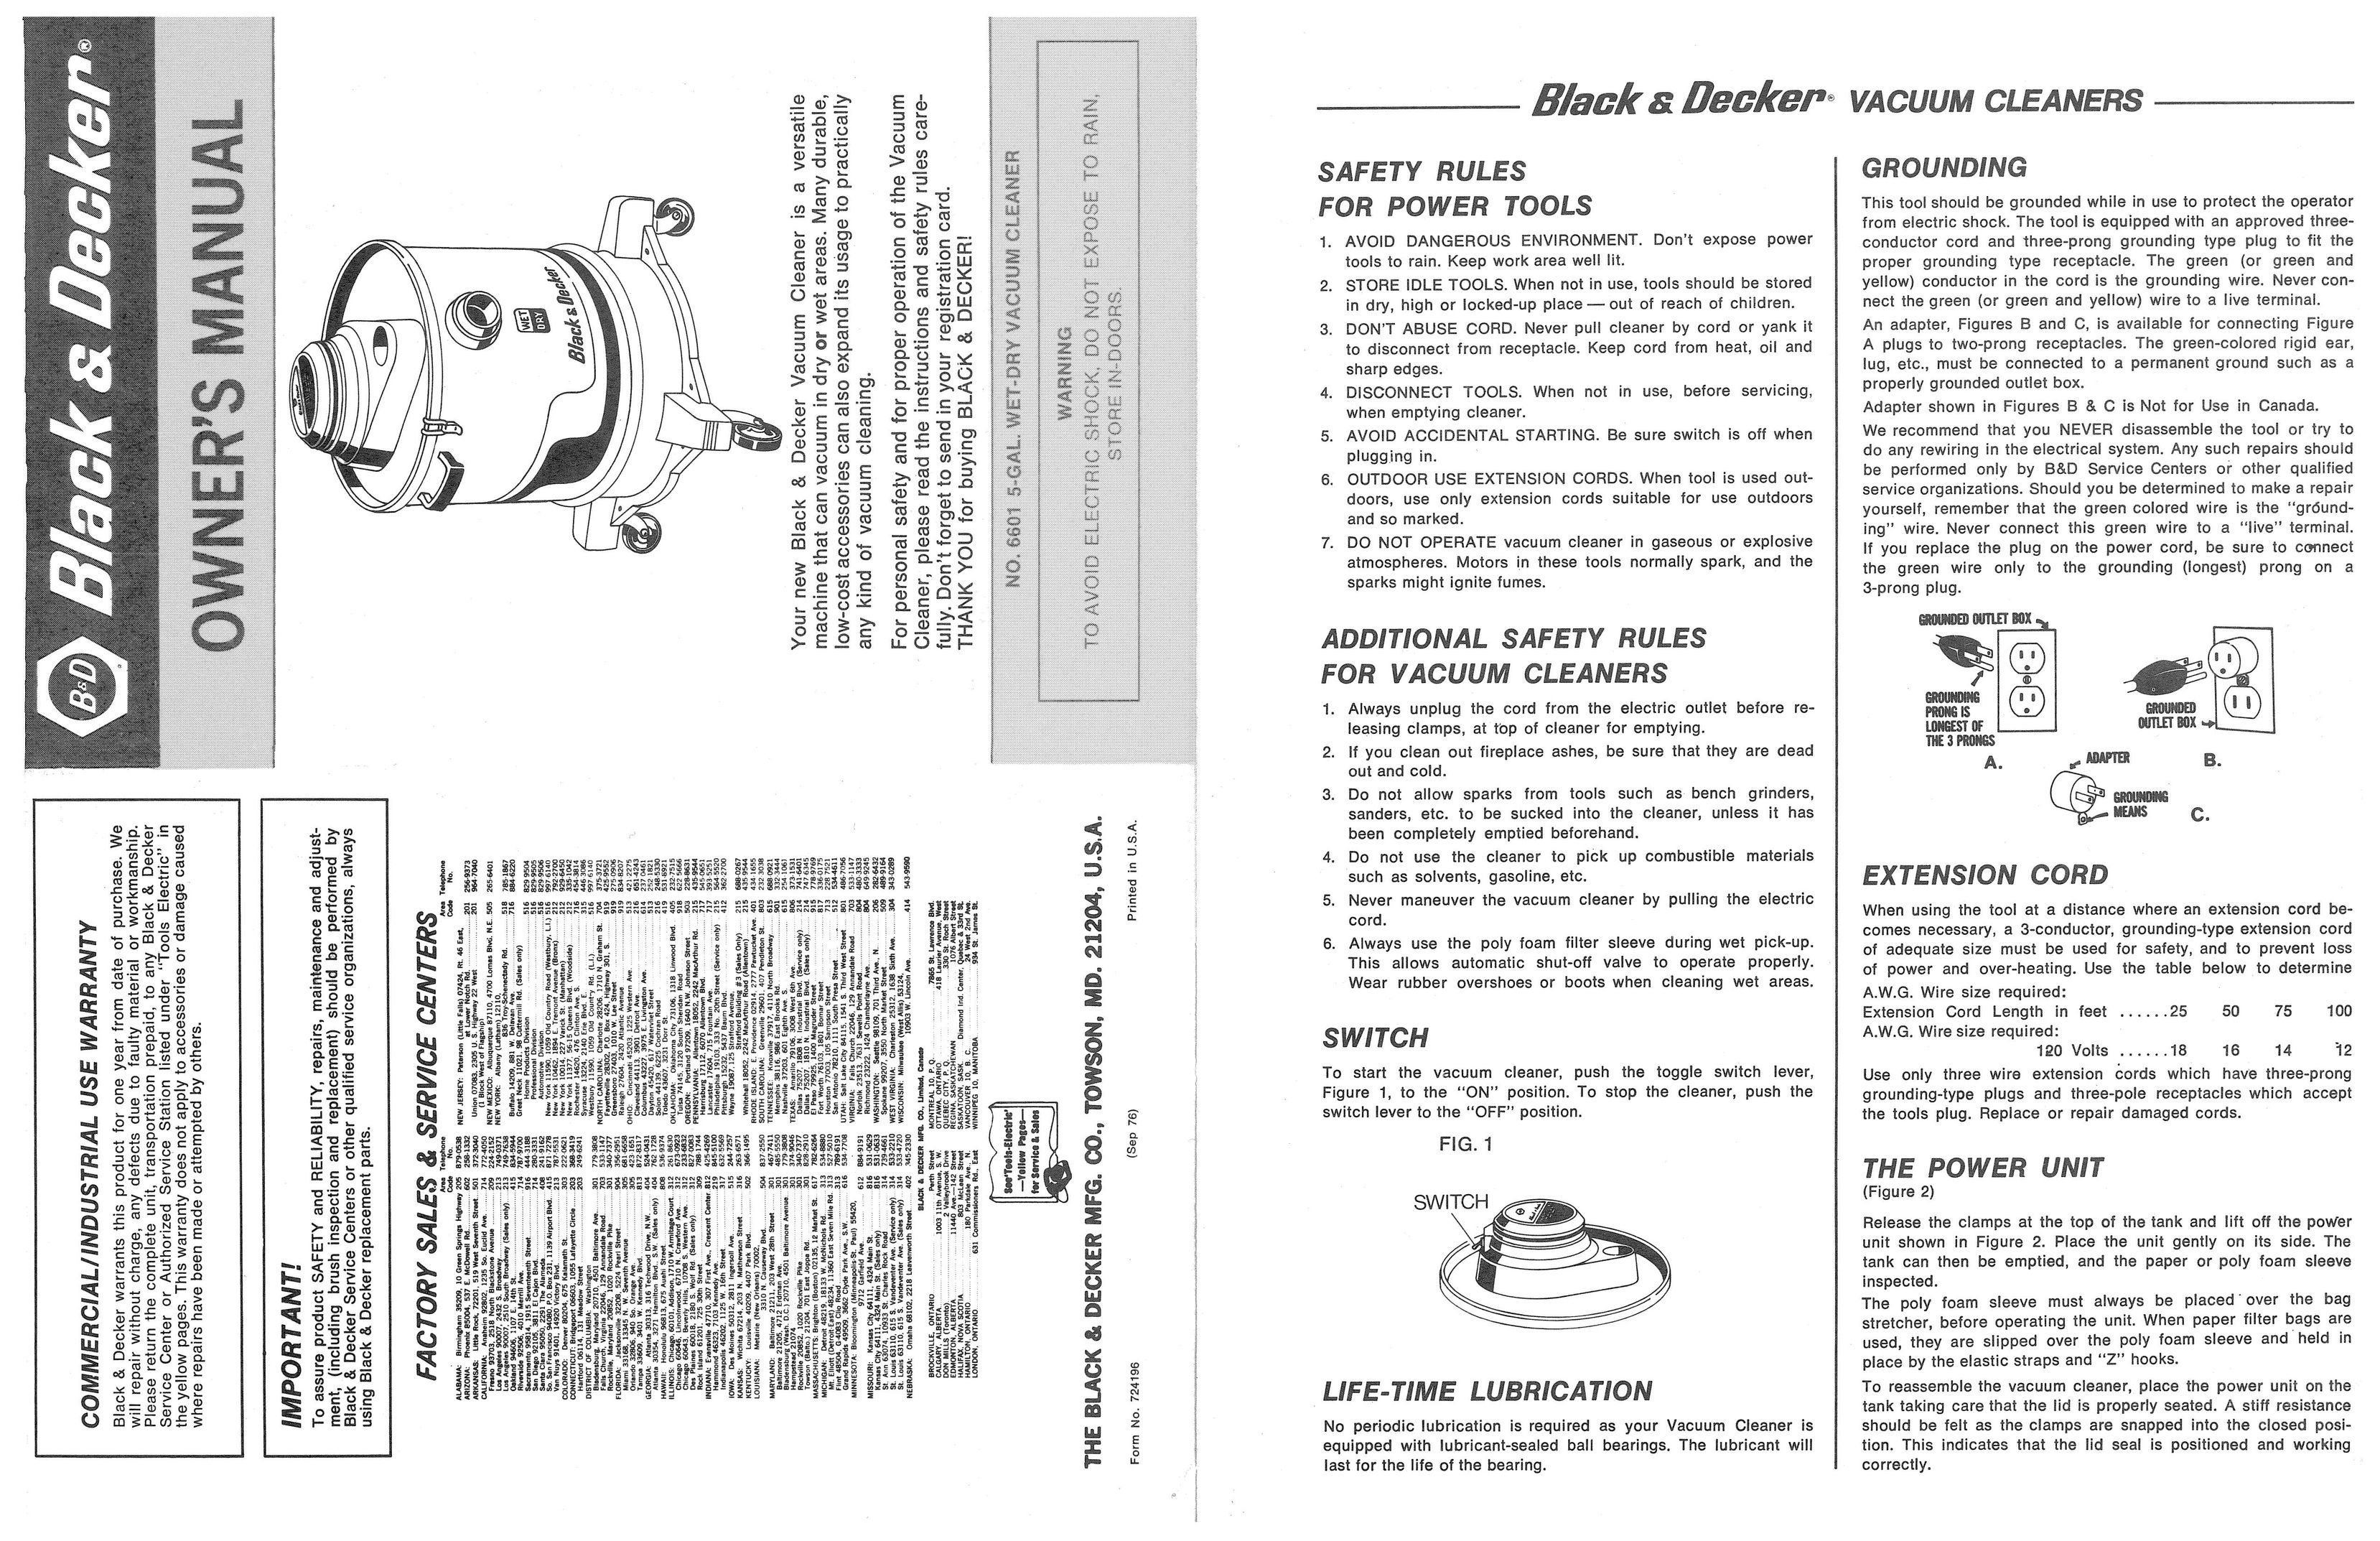 Black & Decker 724196 Vacuum Cleaner User Manual